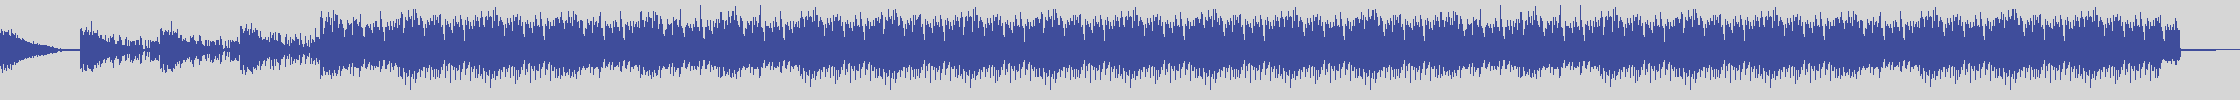 nf_boyz_records [NFY063] Aldo La Mar - Nunca Mas [Deep House Mix] audio wave form